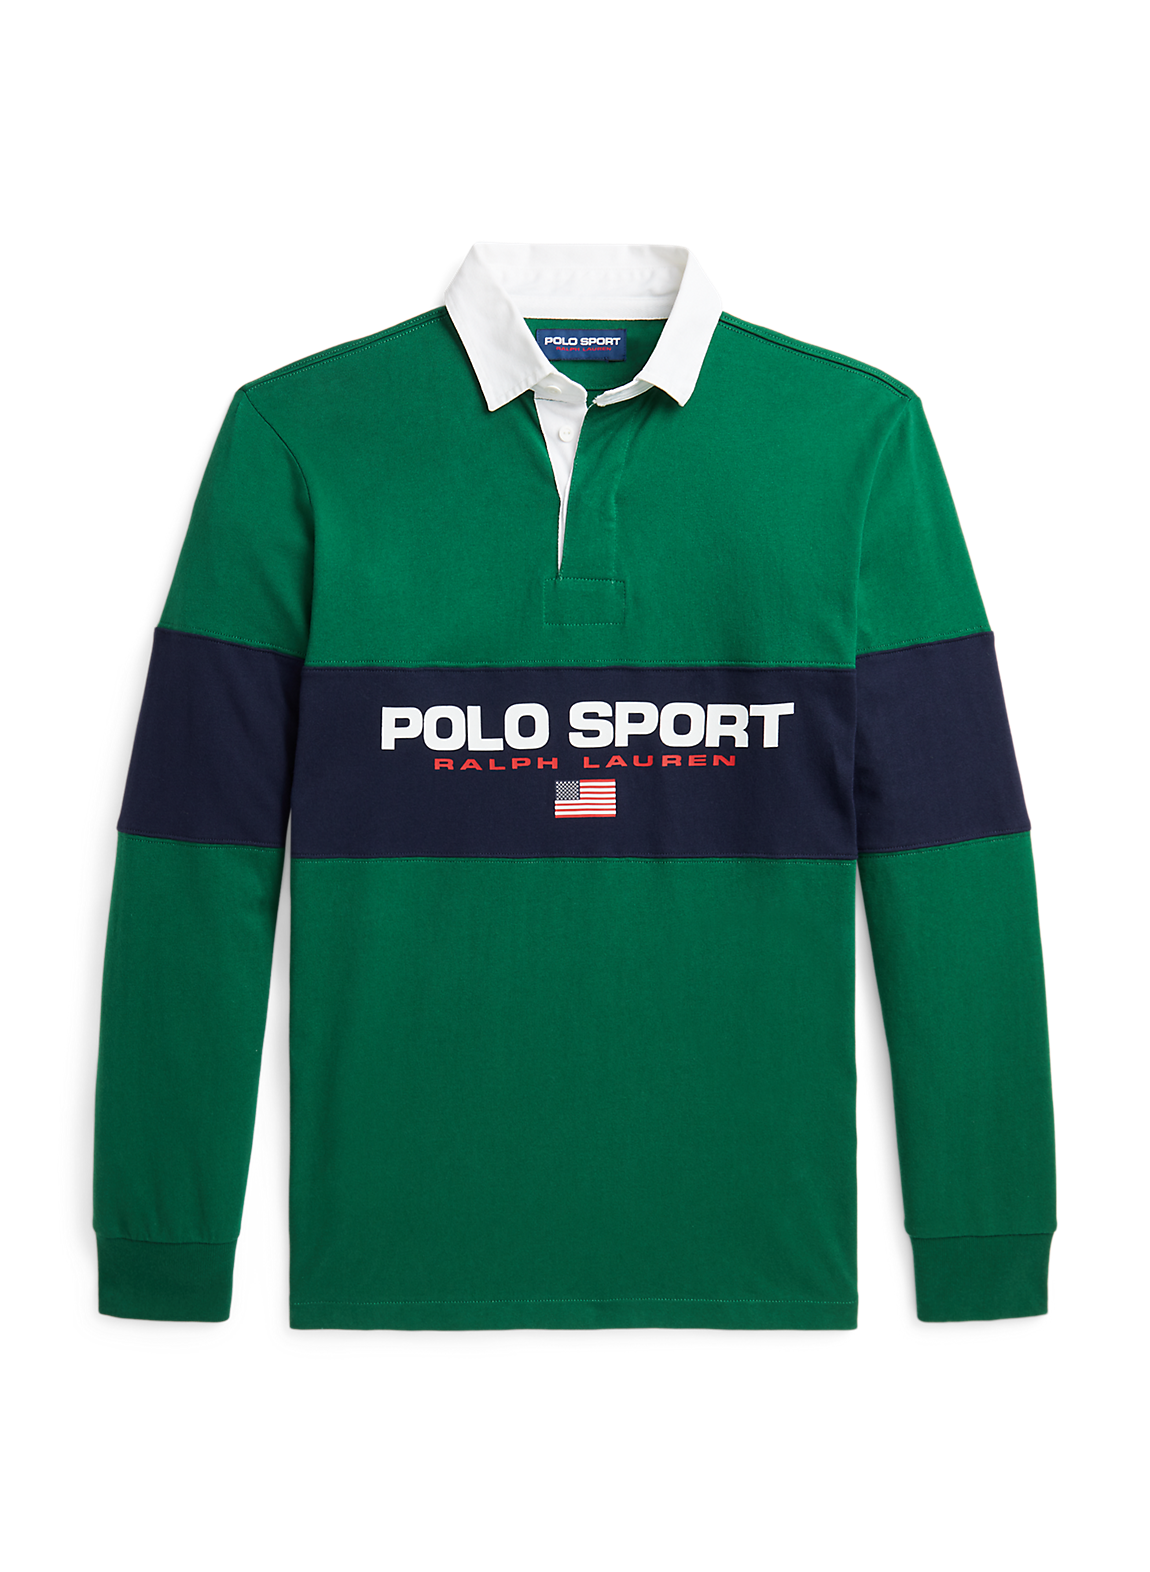 Polo Sport クラシック フィット ラグビー シャツ